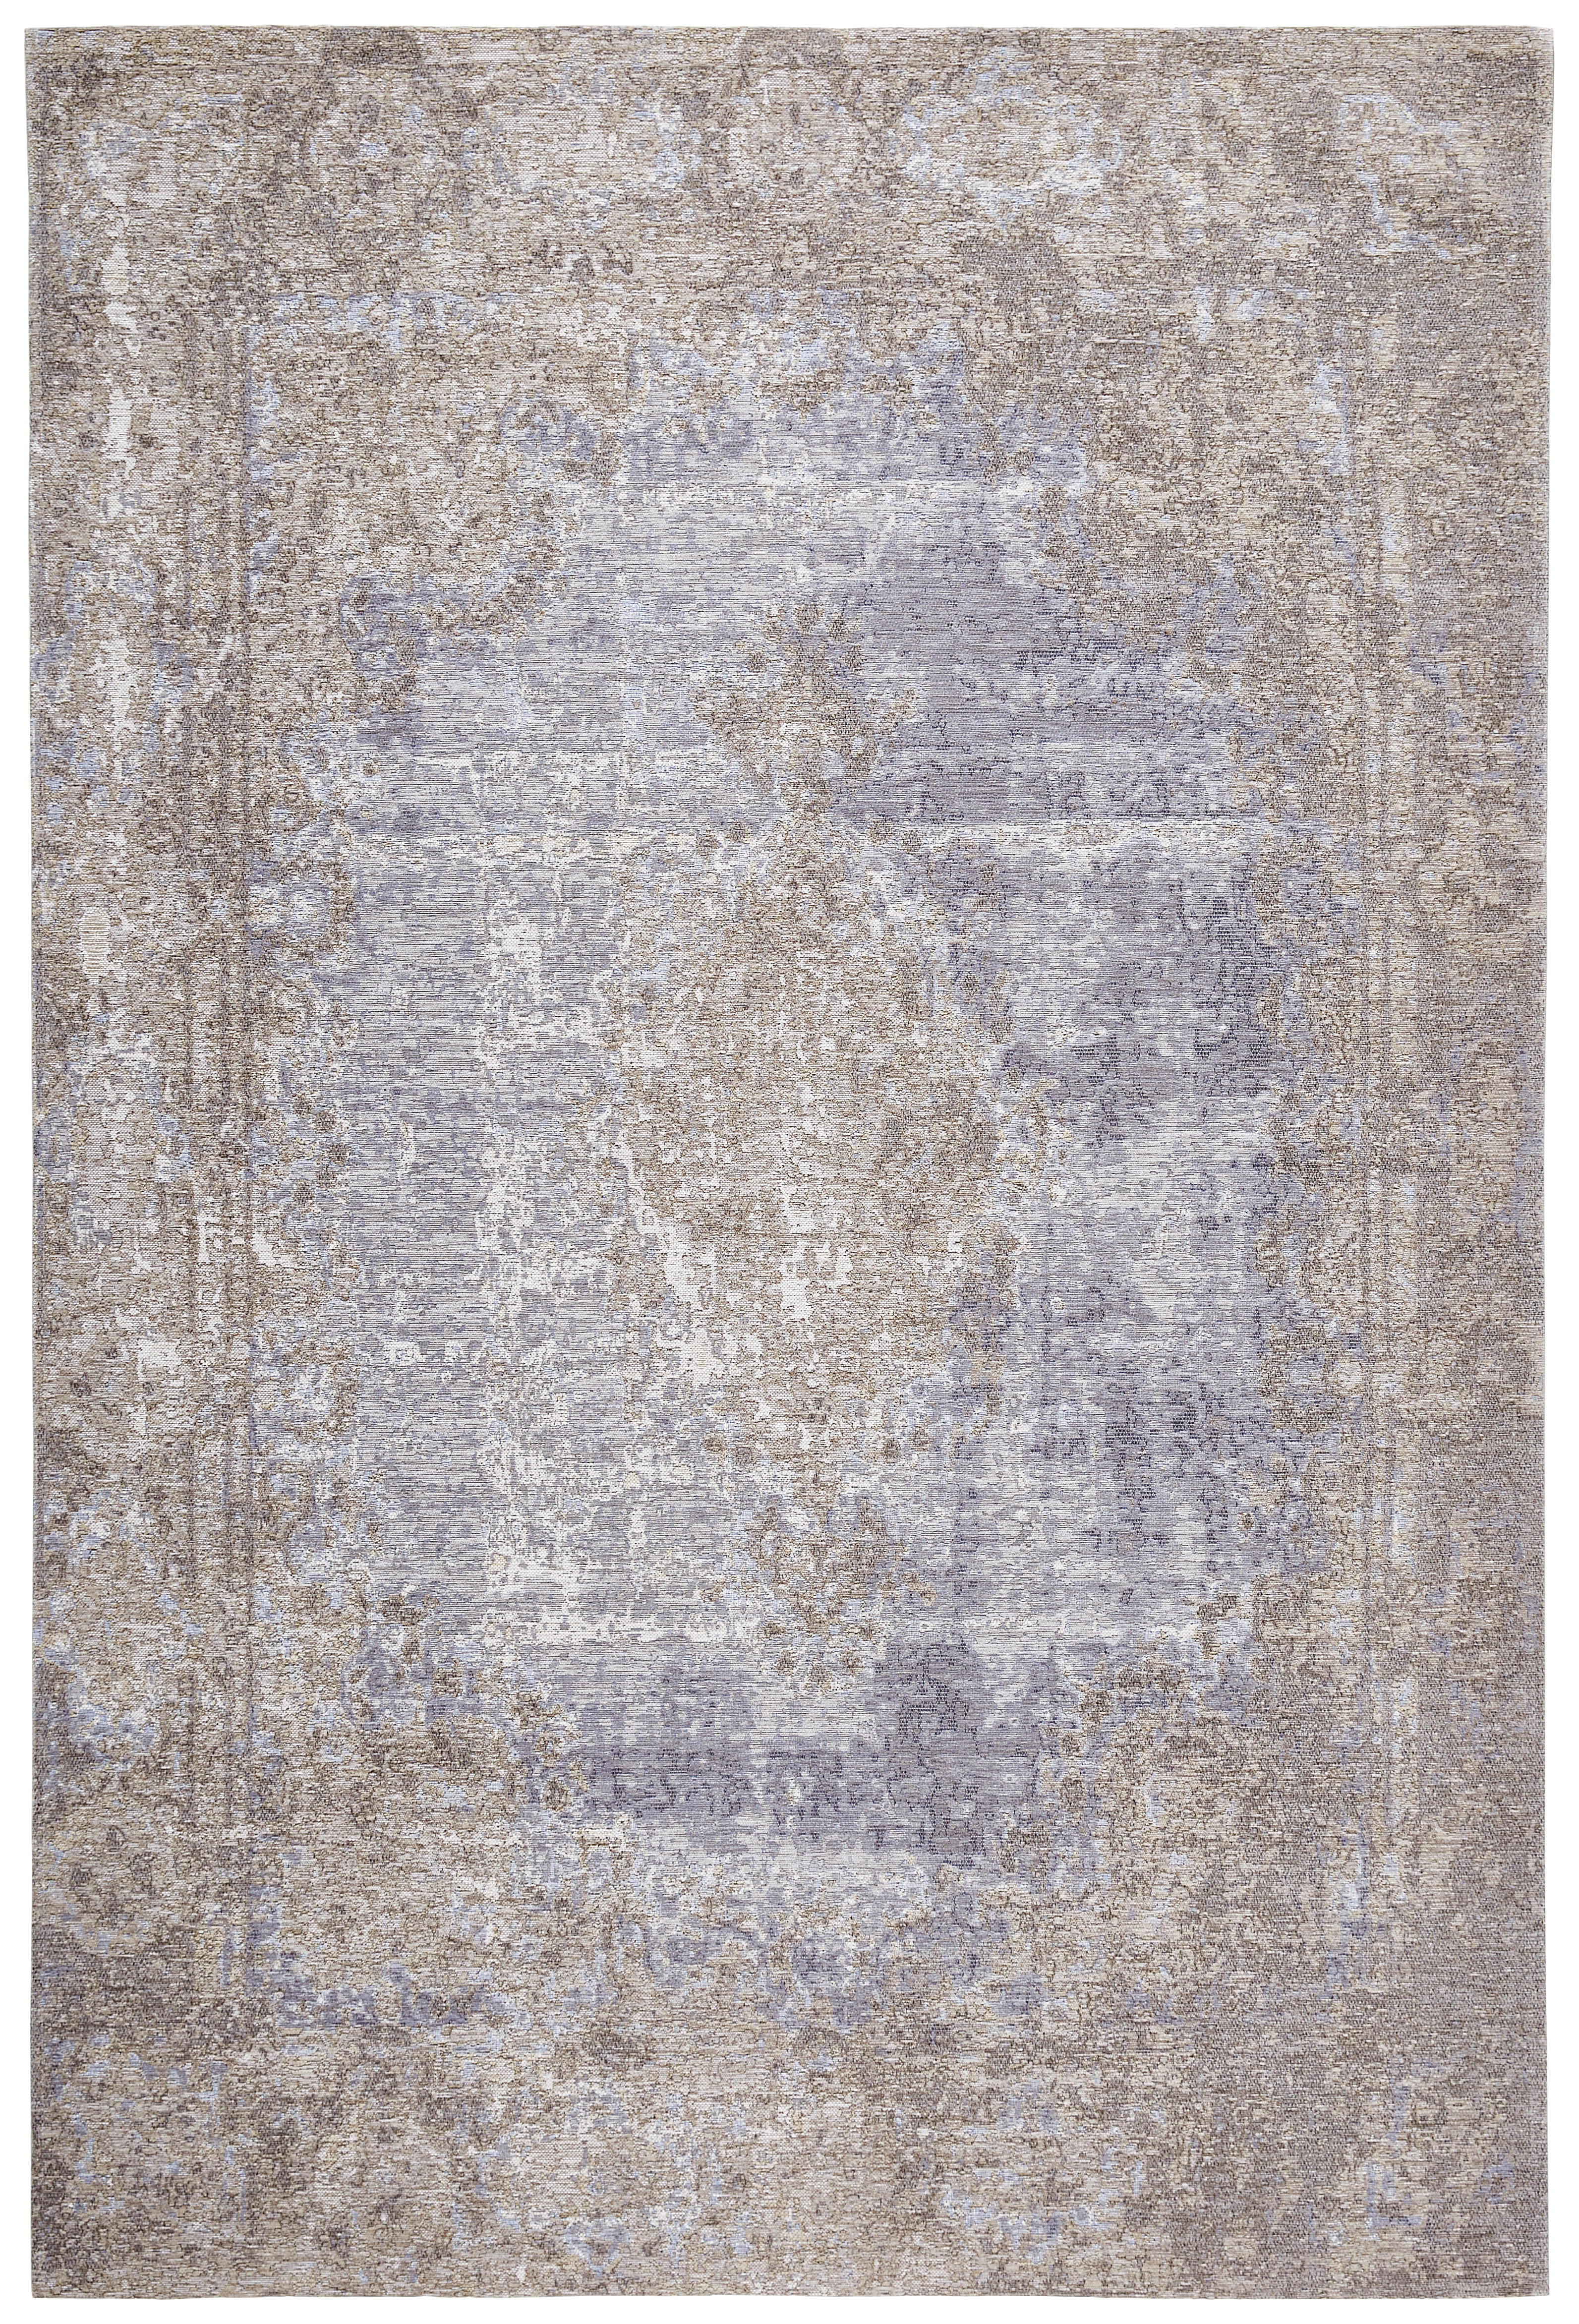 VINTAGE-TEPPICH  200/290 cm  Blau, Beige   - Blau/Beige, Textil (200/290cm) - Novel